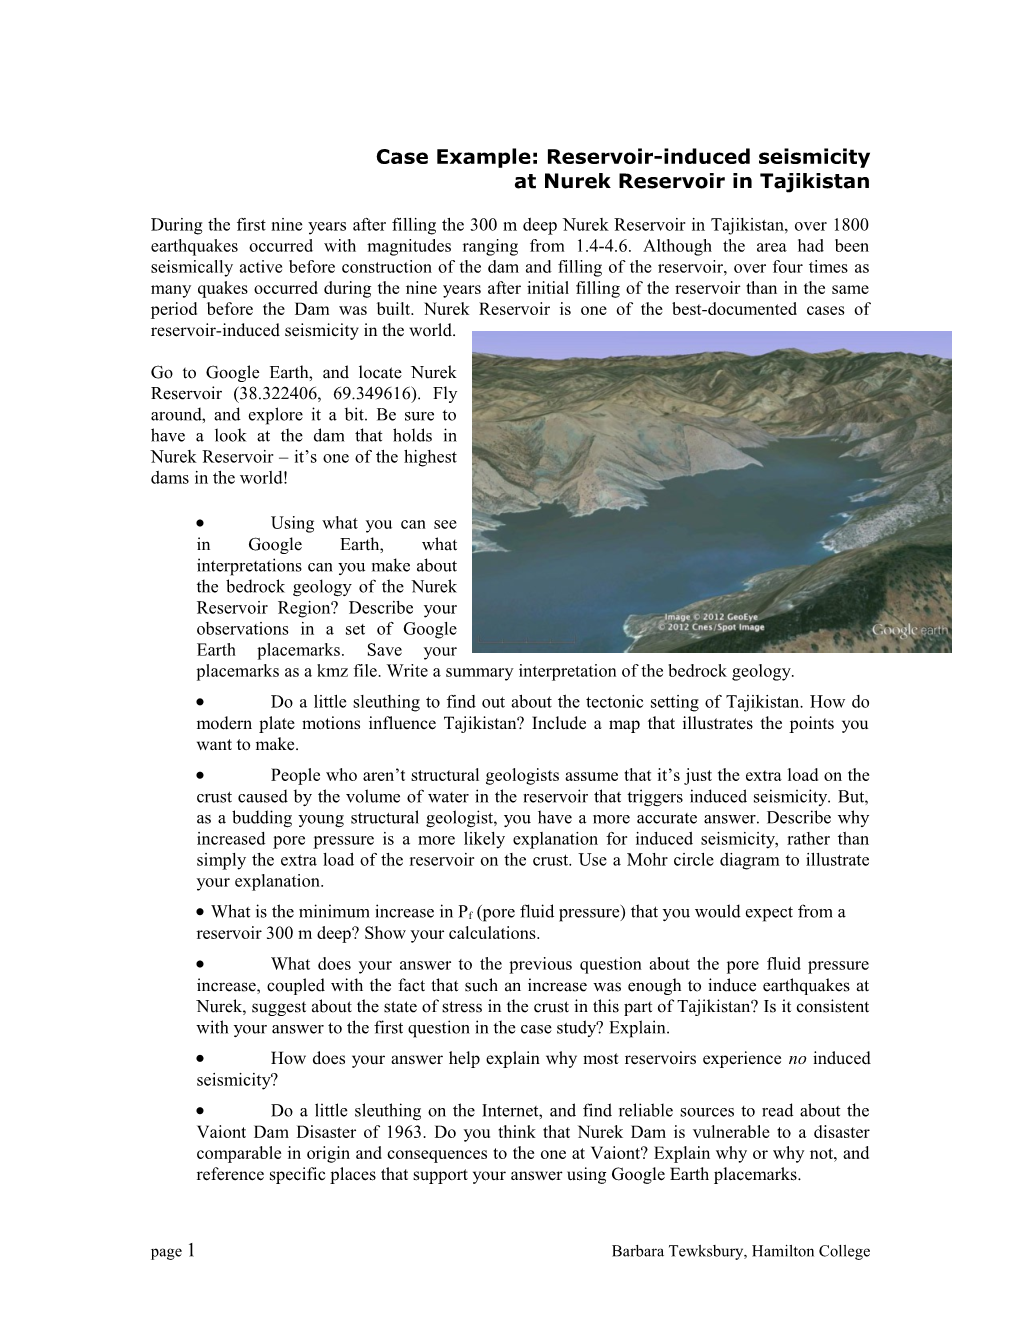 Case Example: Reservoir-Induced Seismicity at Nurek Reservoir in Tajikistan